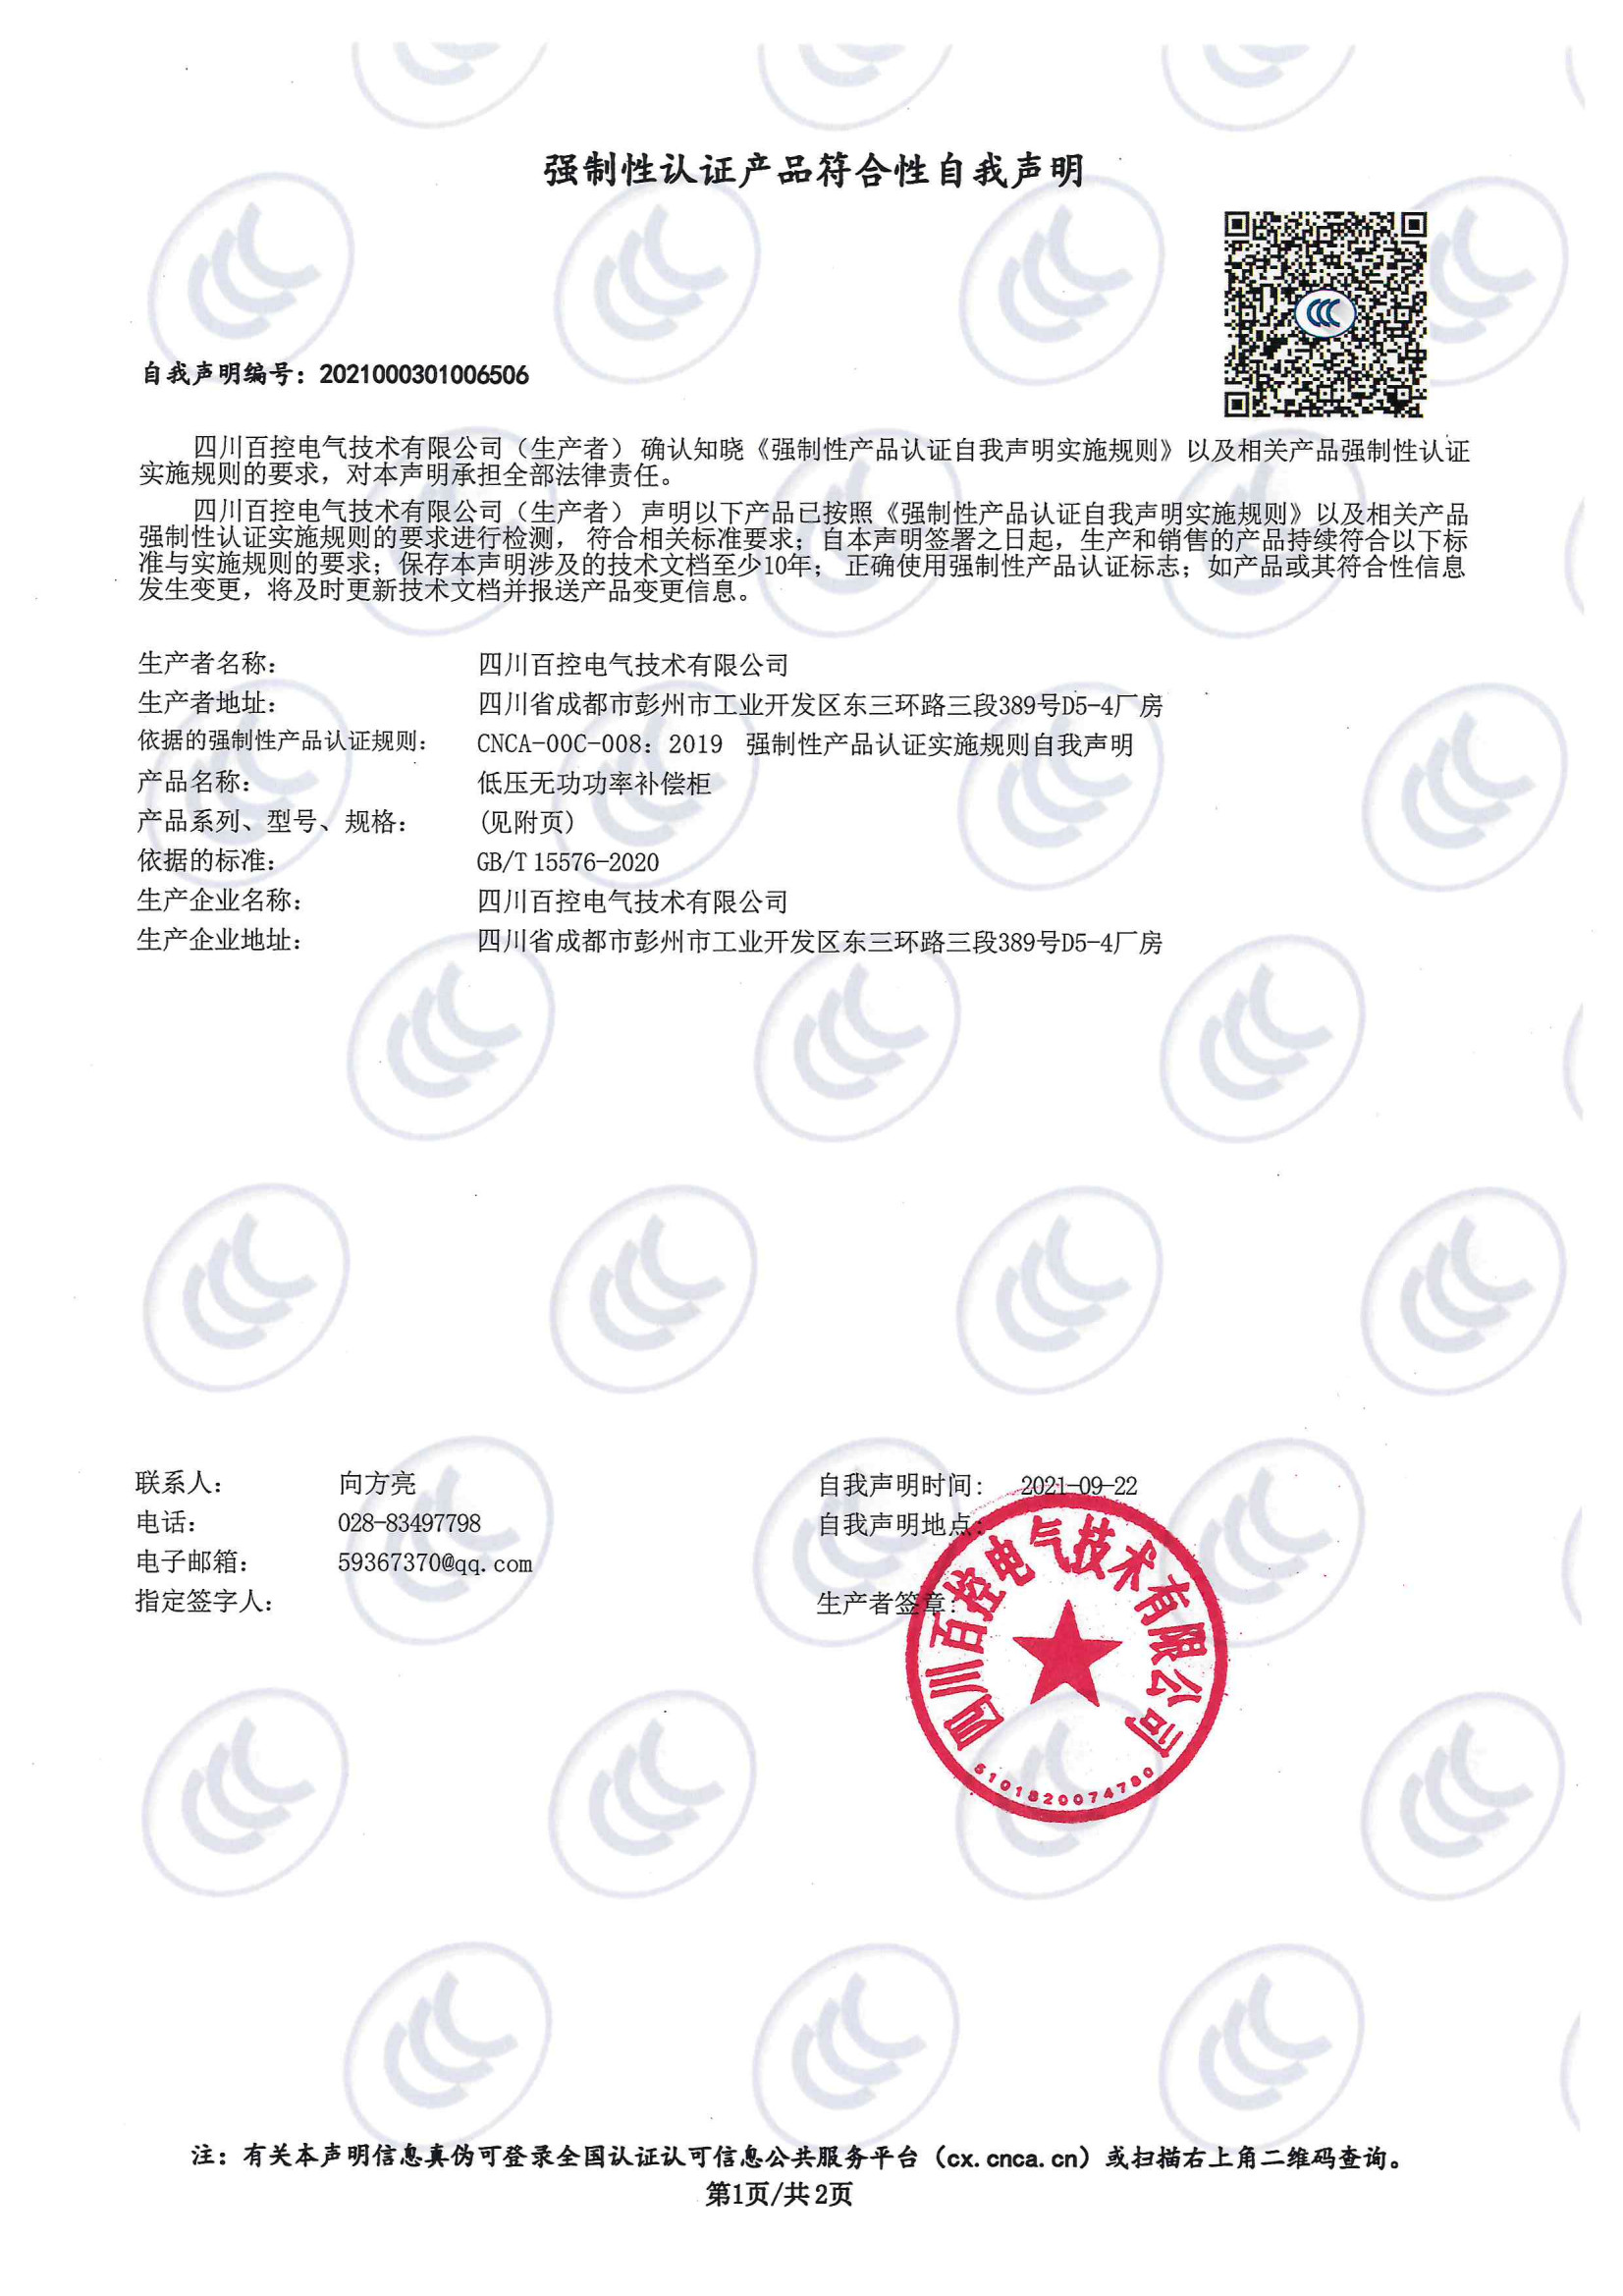 Sichuan Baikong Electric Technology Co., Ltd. Certifications